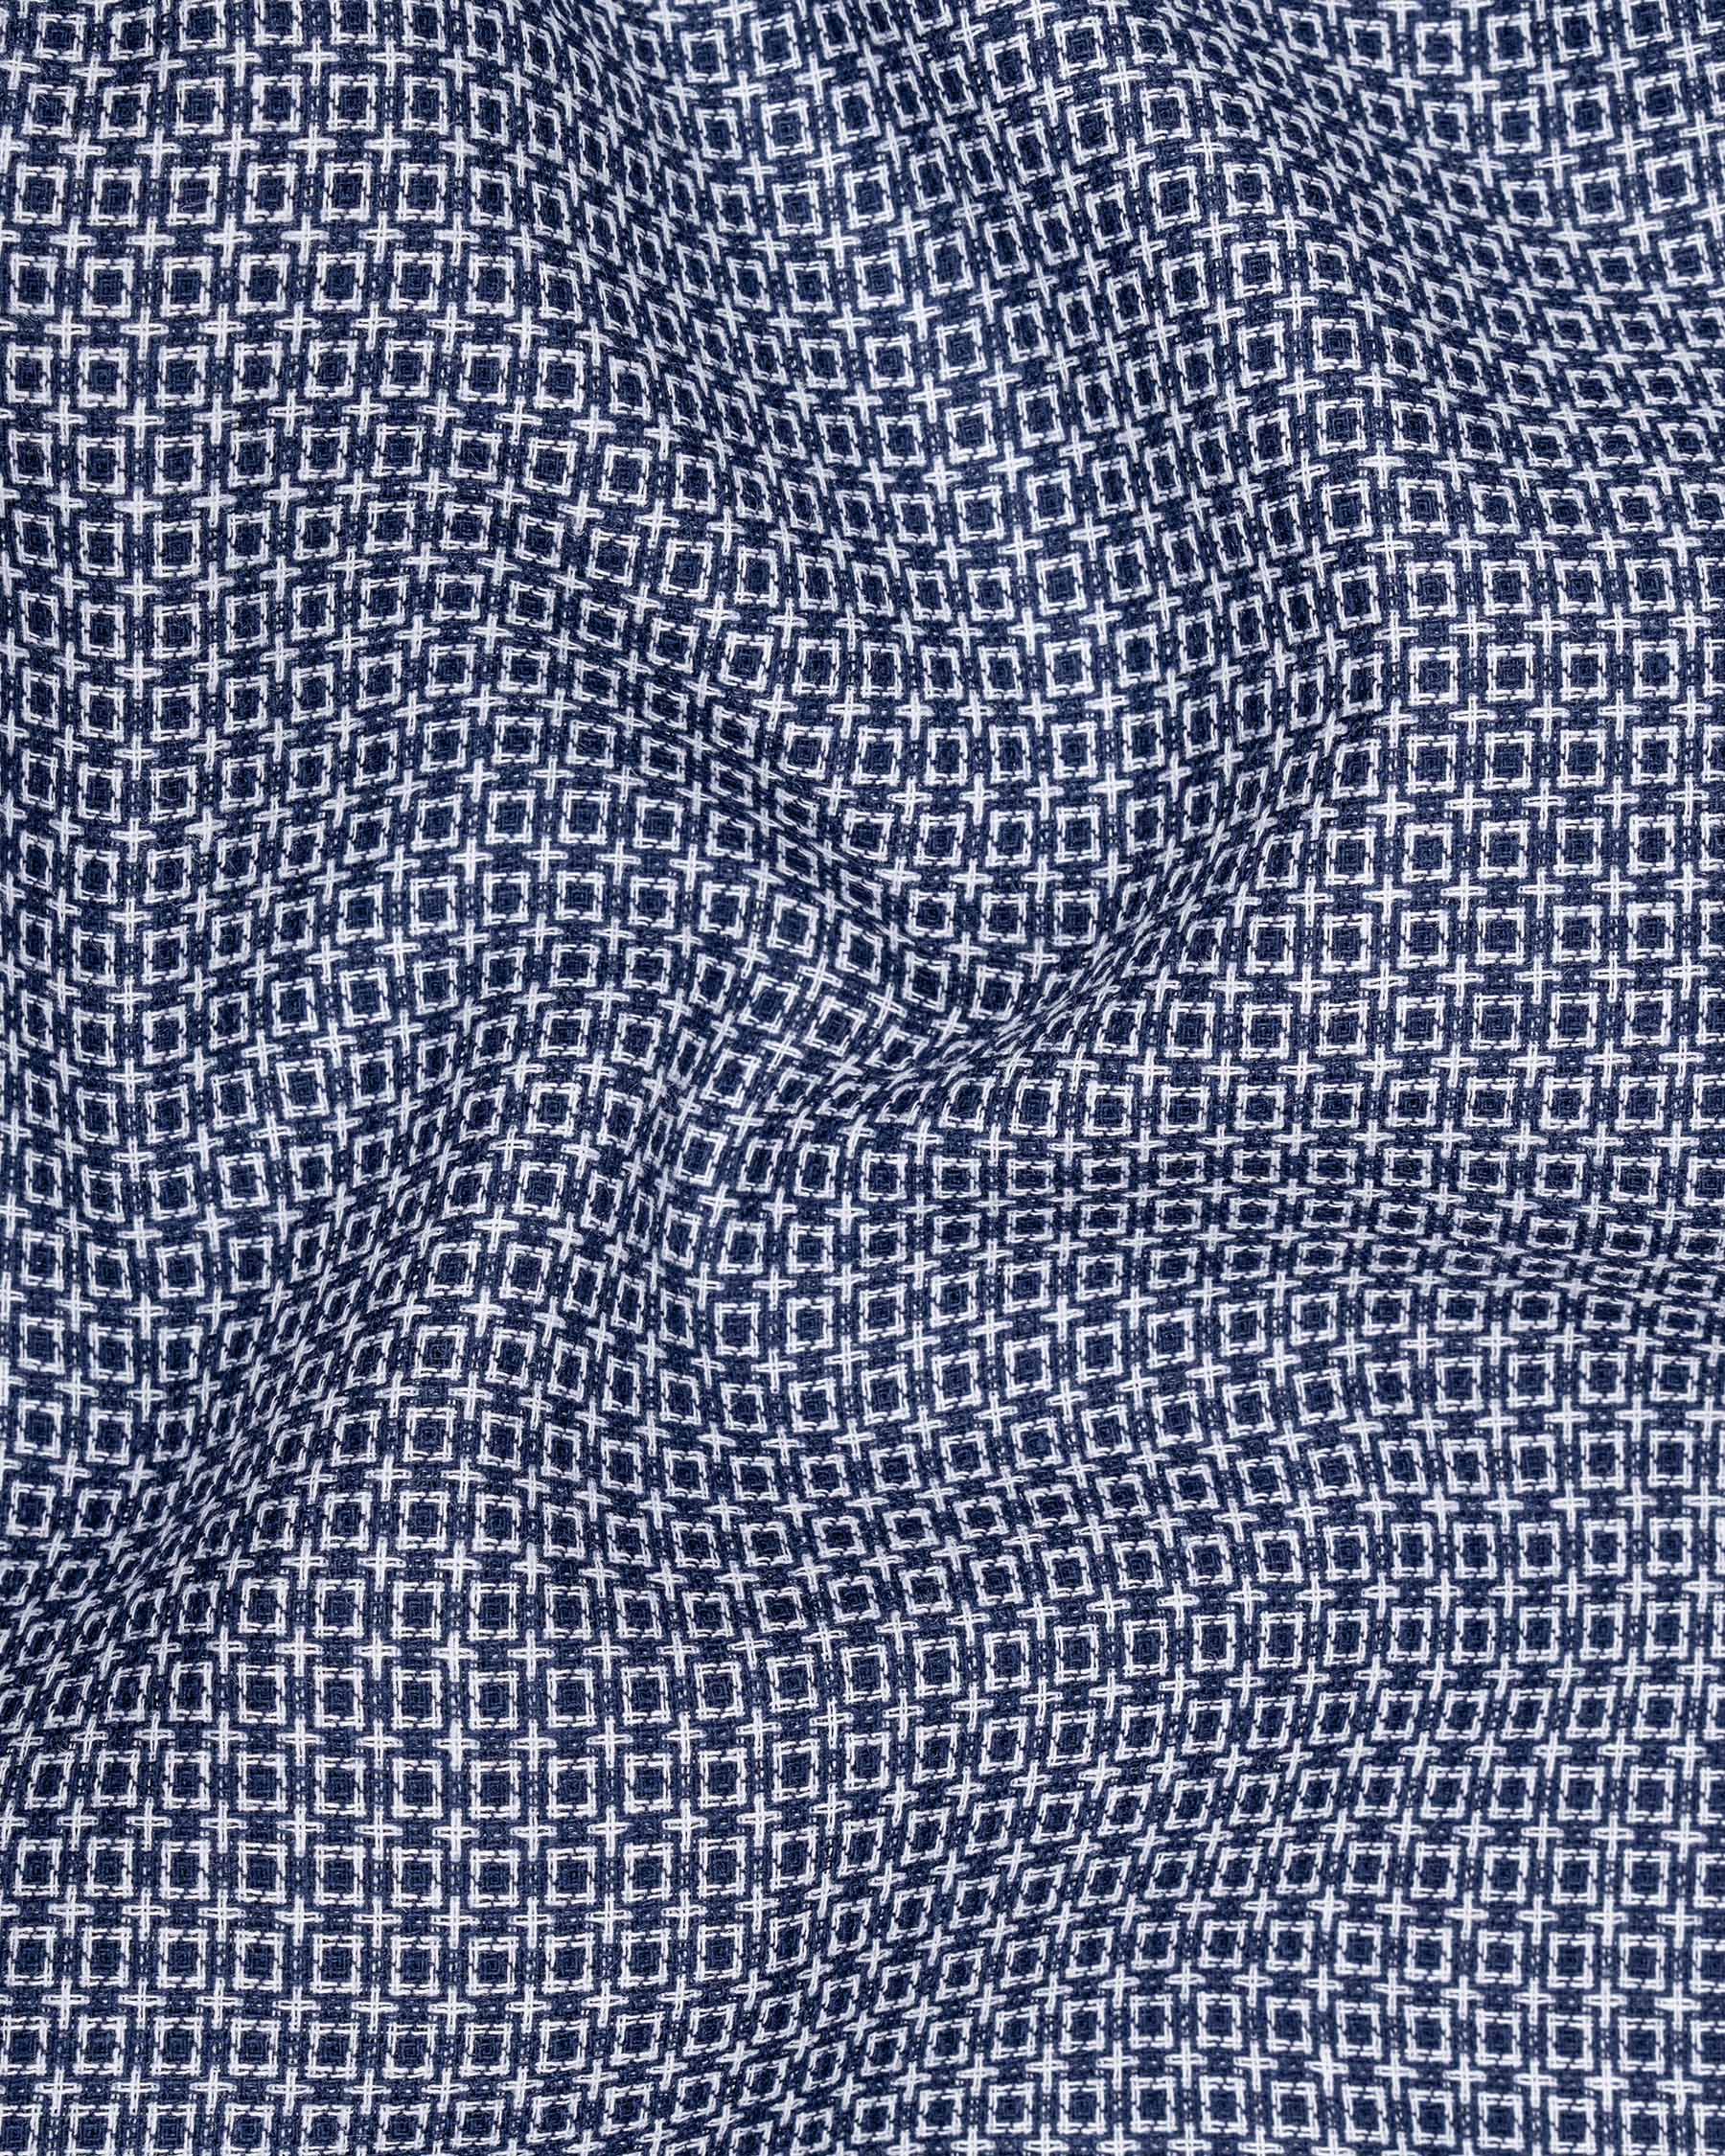 Rhino Blue and White Geometrical Design Dobby Textured Premium Giza Cotton Shirt  6684-38,6684-38,6684-39,6684-39,6684-40,6684-40,6684-42,6684-42,6684-44,6684-44,6684-46,6684-46,6684-48,6684-48,6684-50,6684-50,6684-52,6684-52